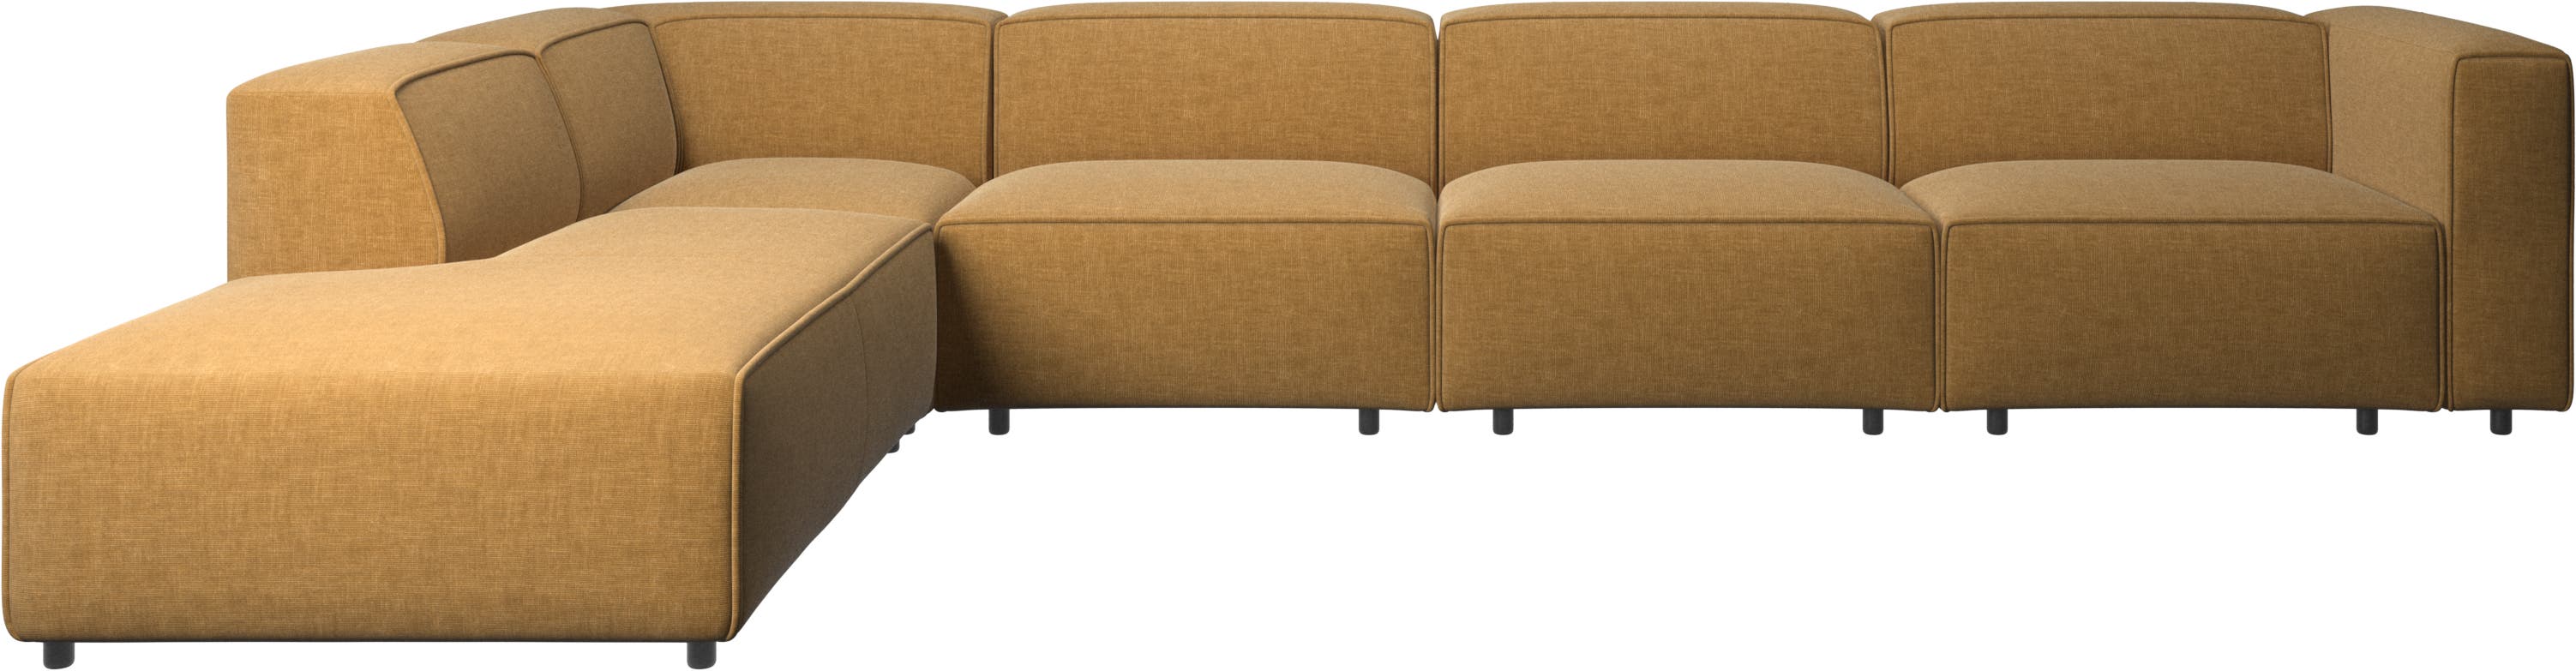 Carmo motion corner sofa